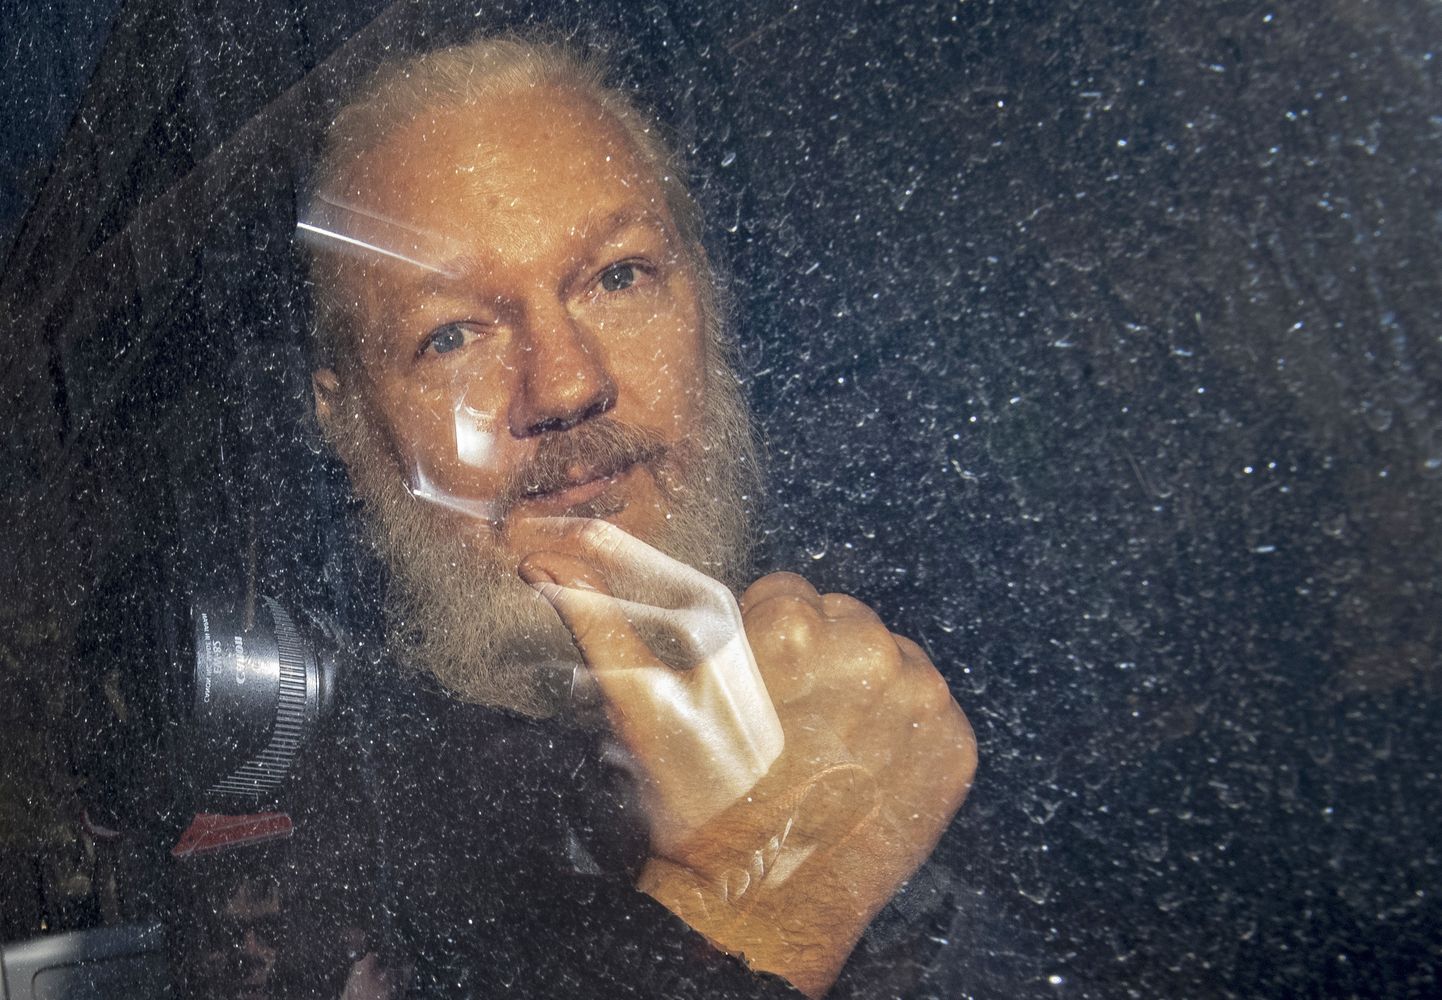 WikiLeaksi asutaja Julian Assange.